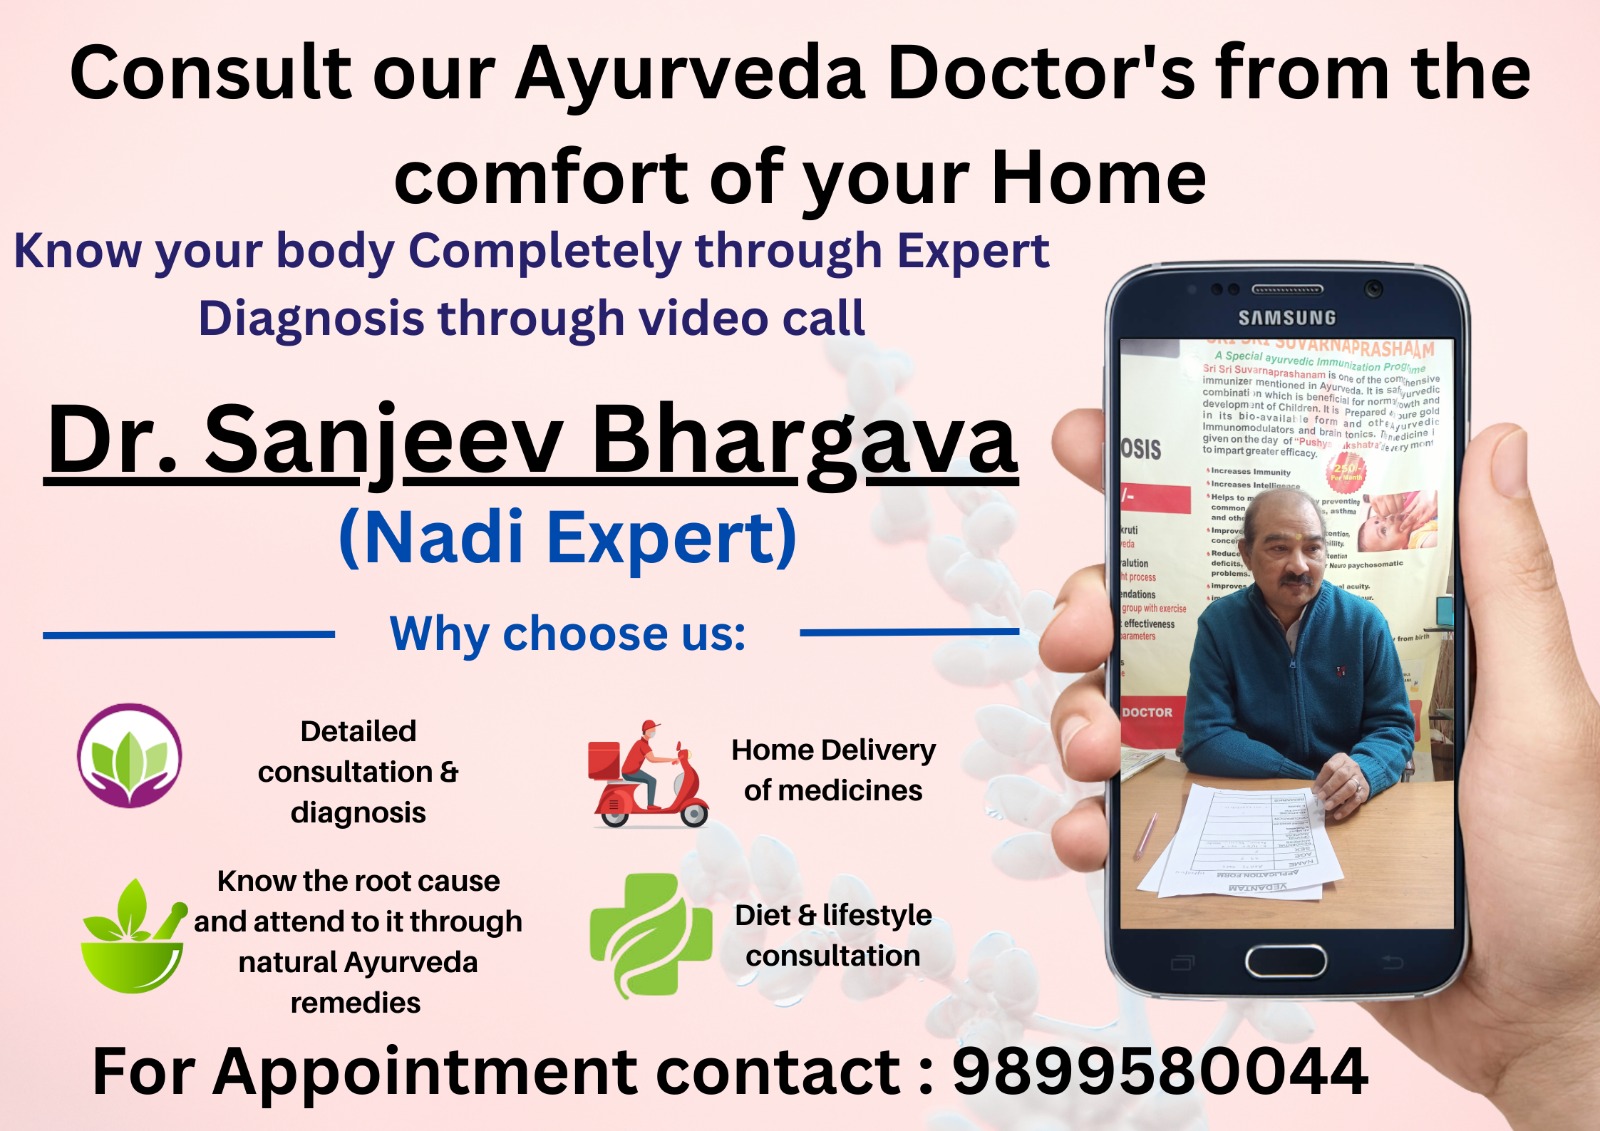 Ayurvedic Doctor in Gurgaon